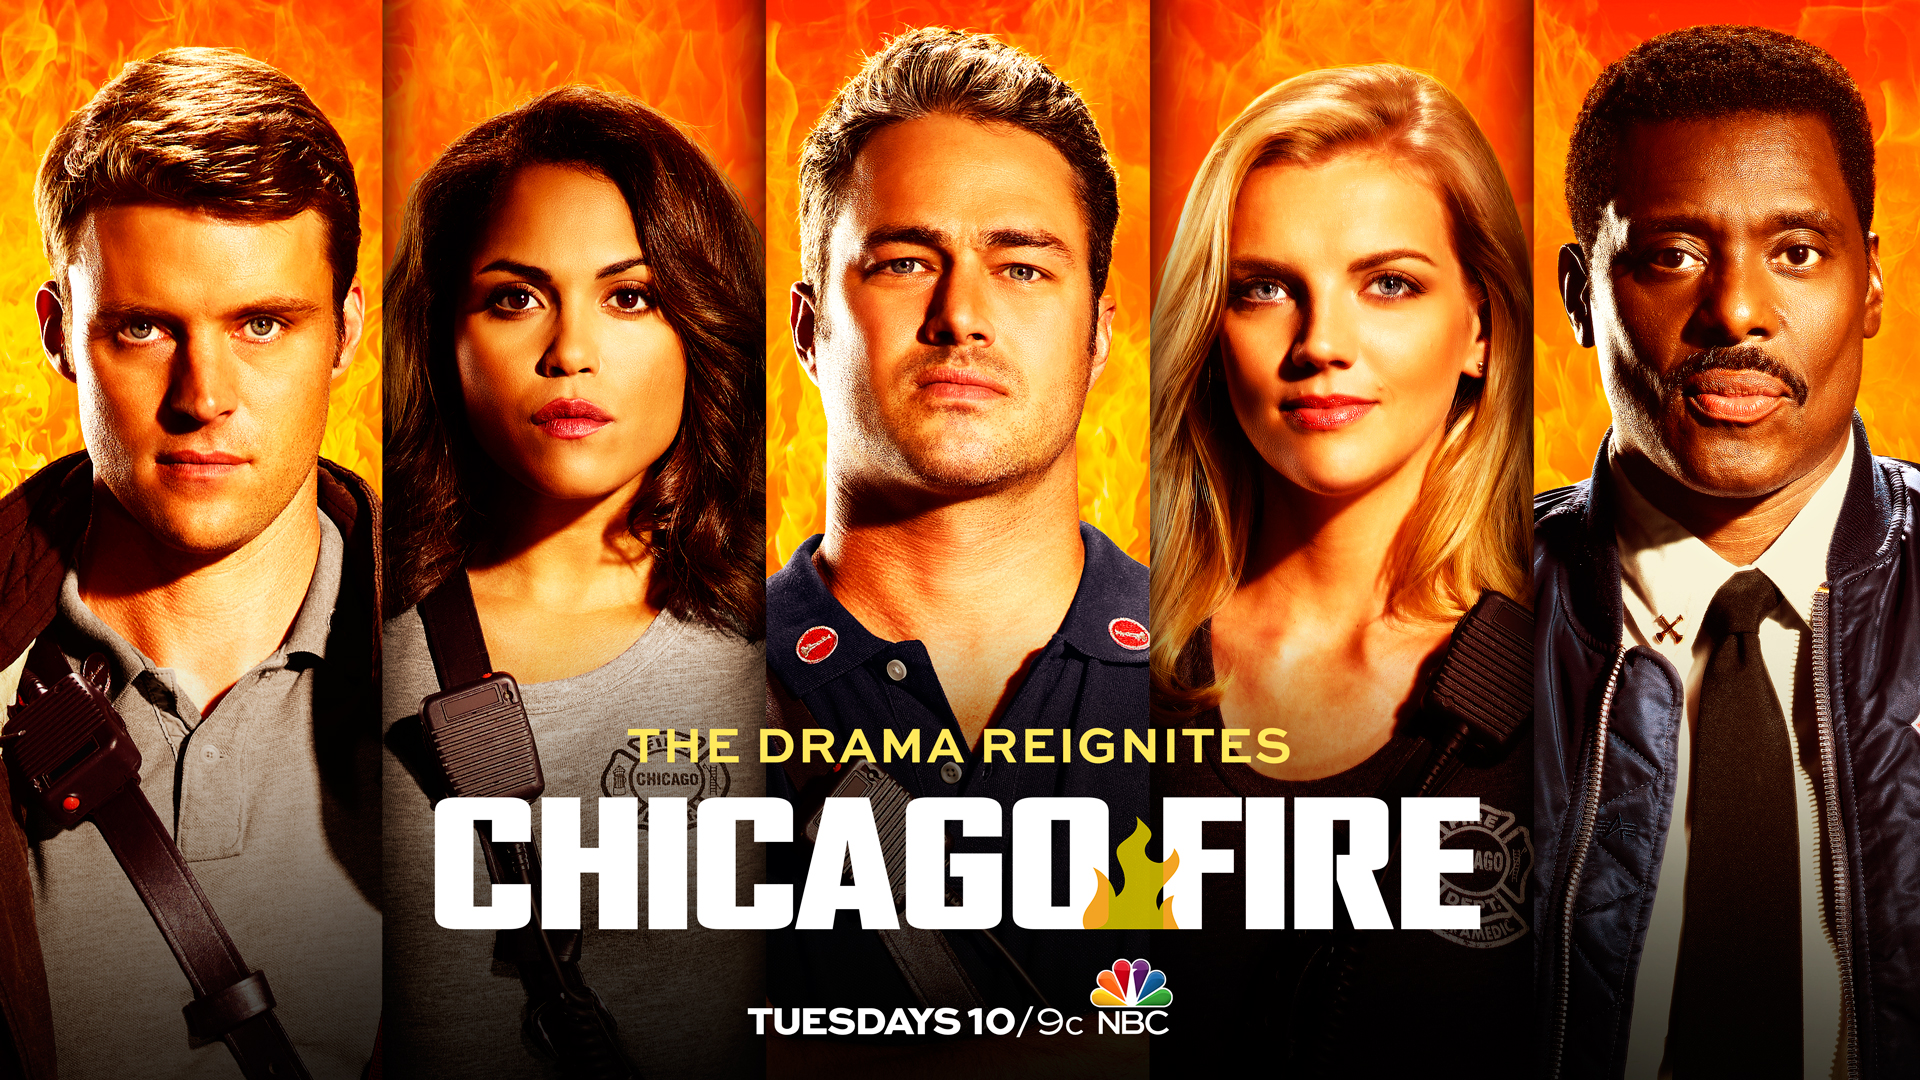 'Chicago Fire' season finale